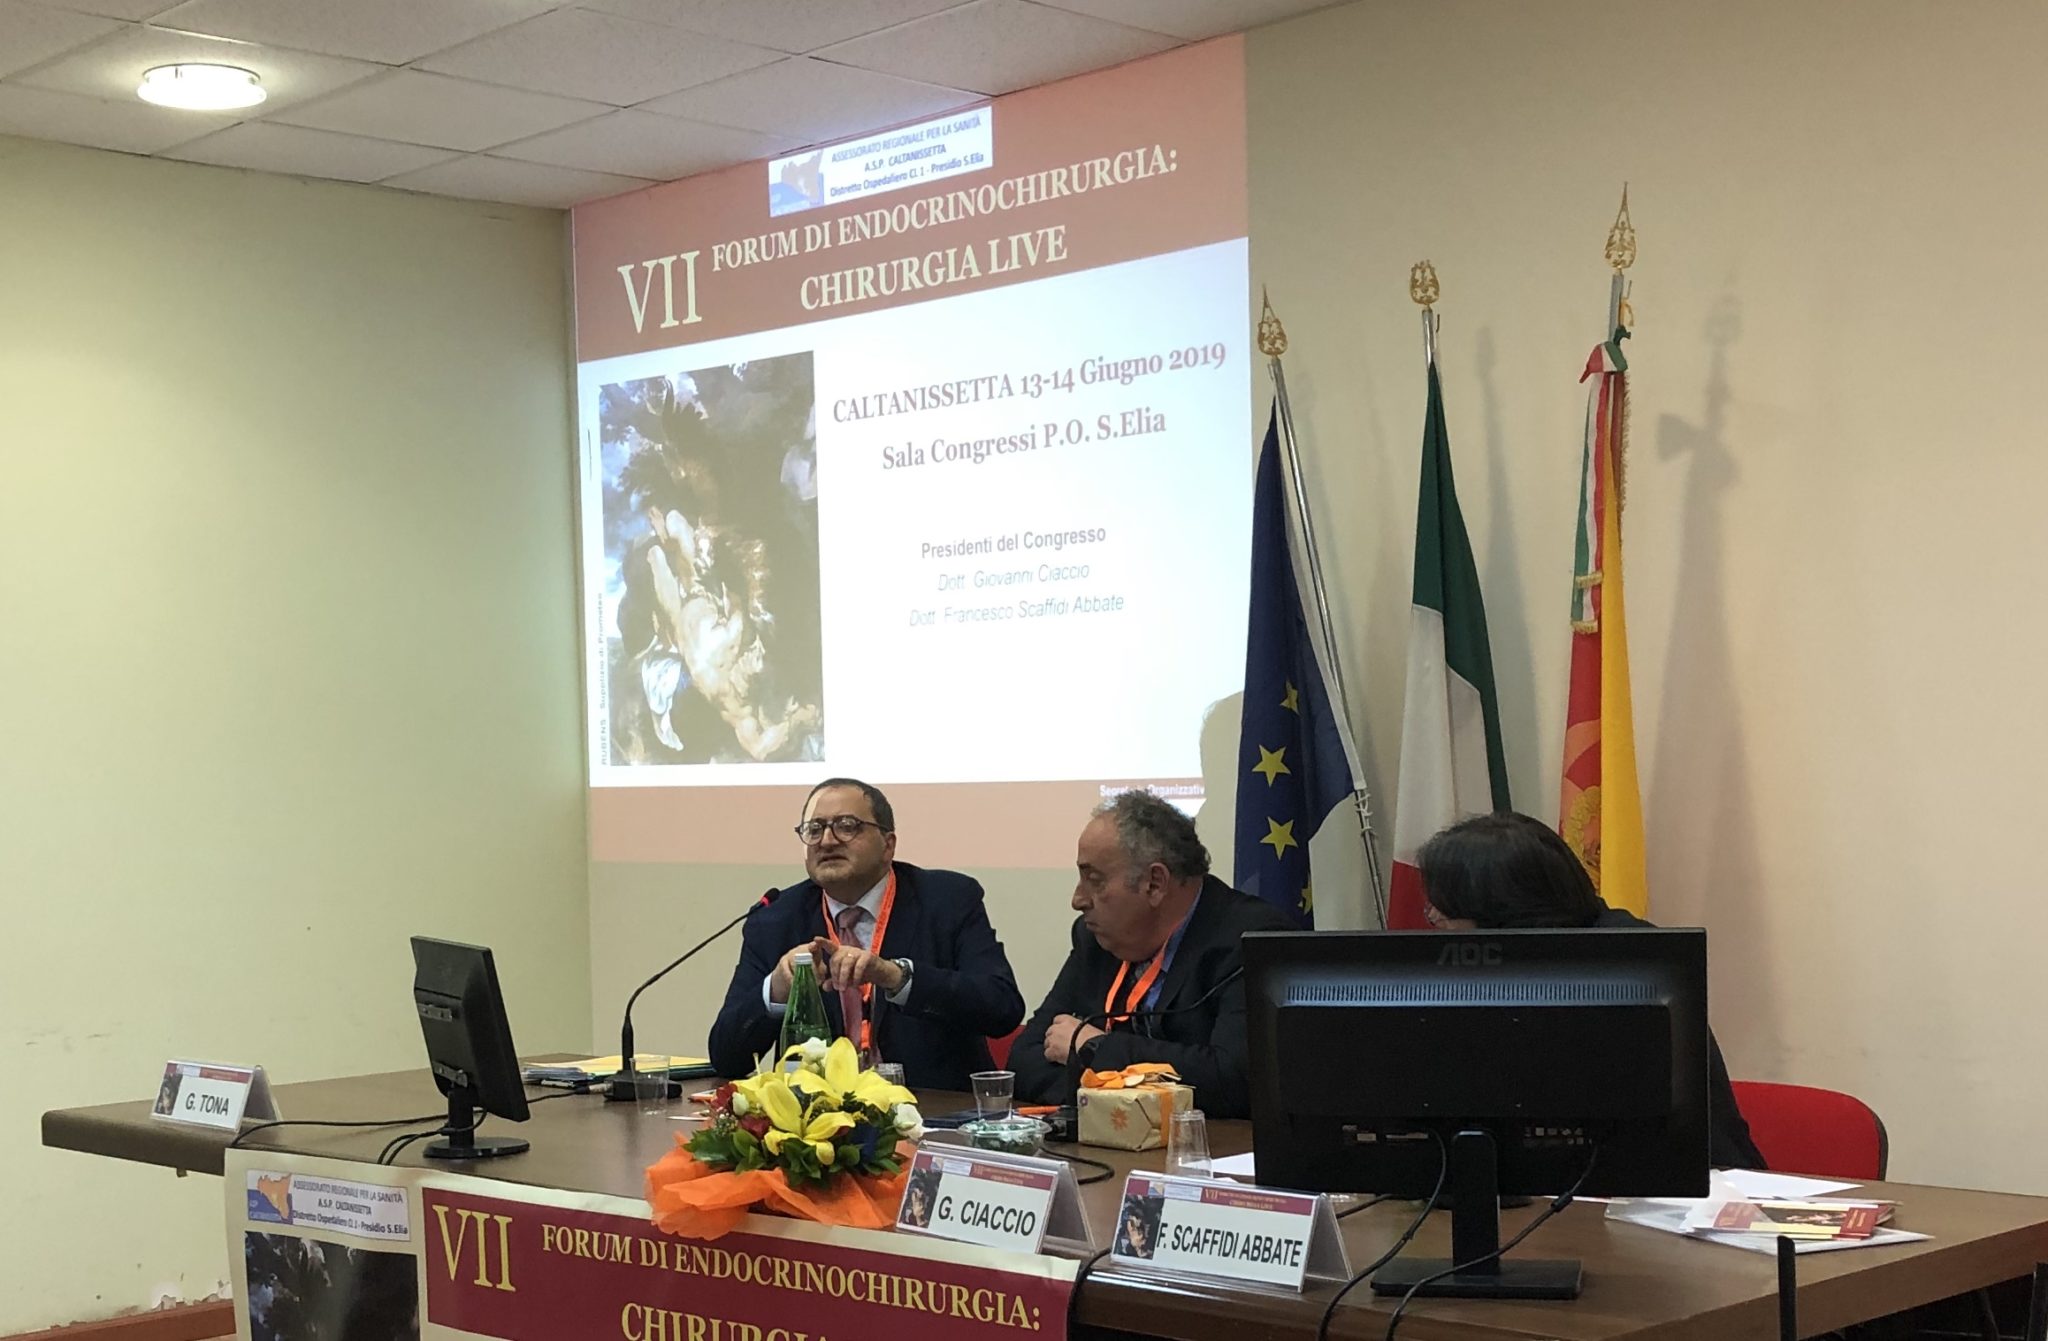 Caltanissetta, forum di Endocrinochirurgia: “interventi live al Sant’Elia”